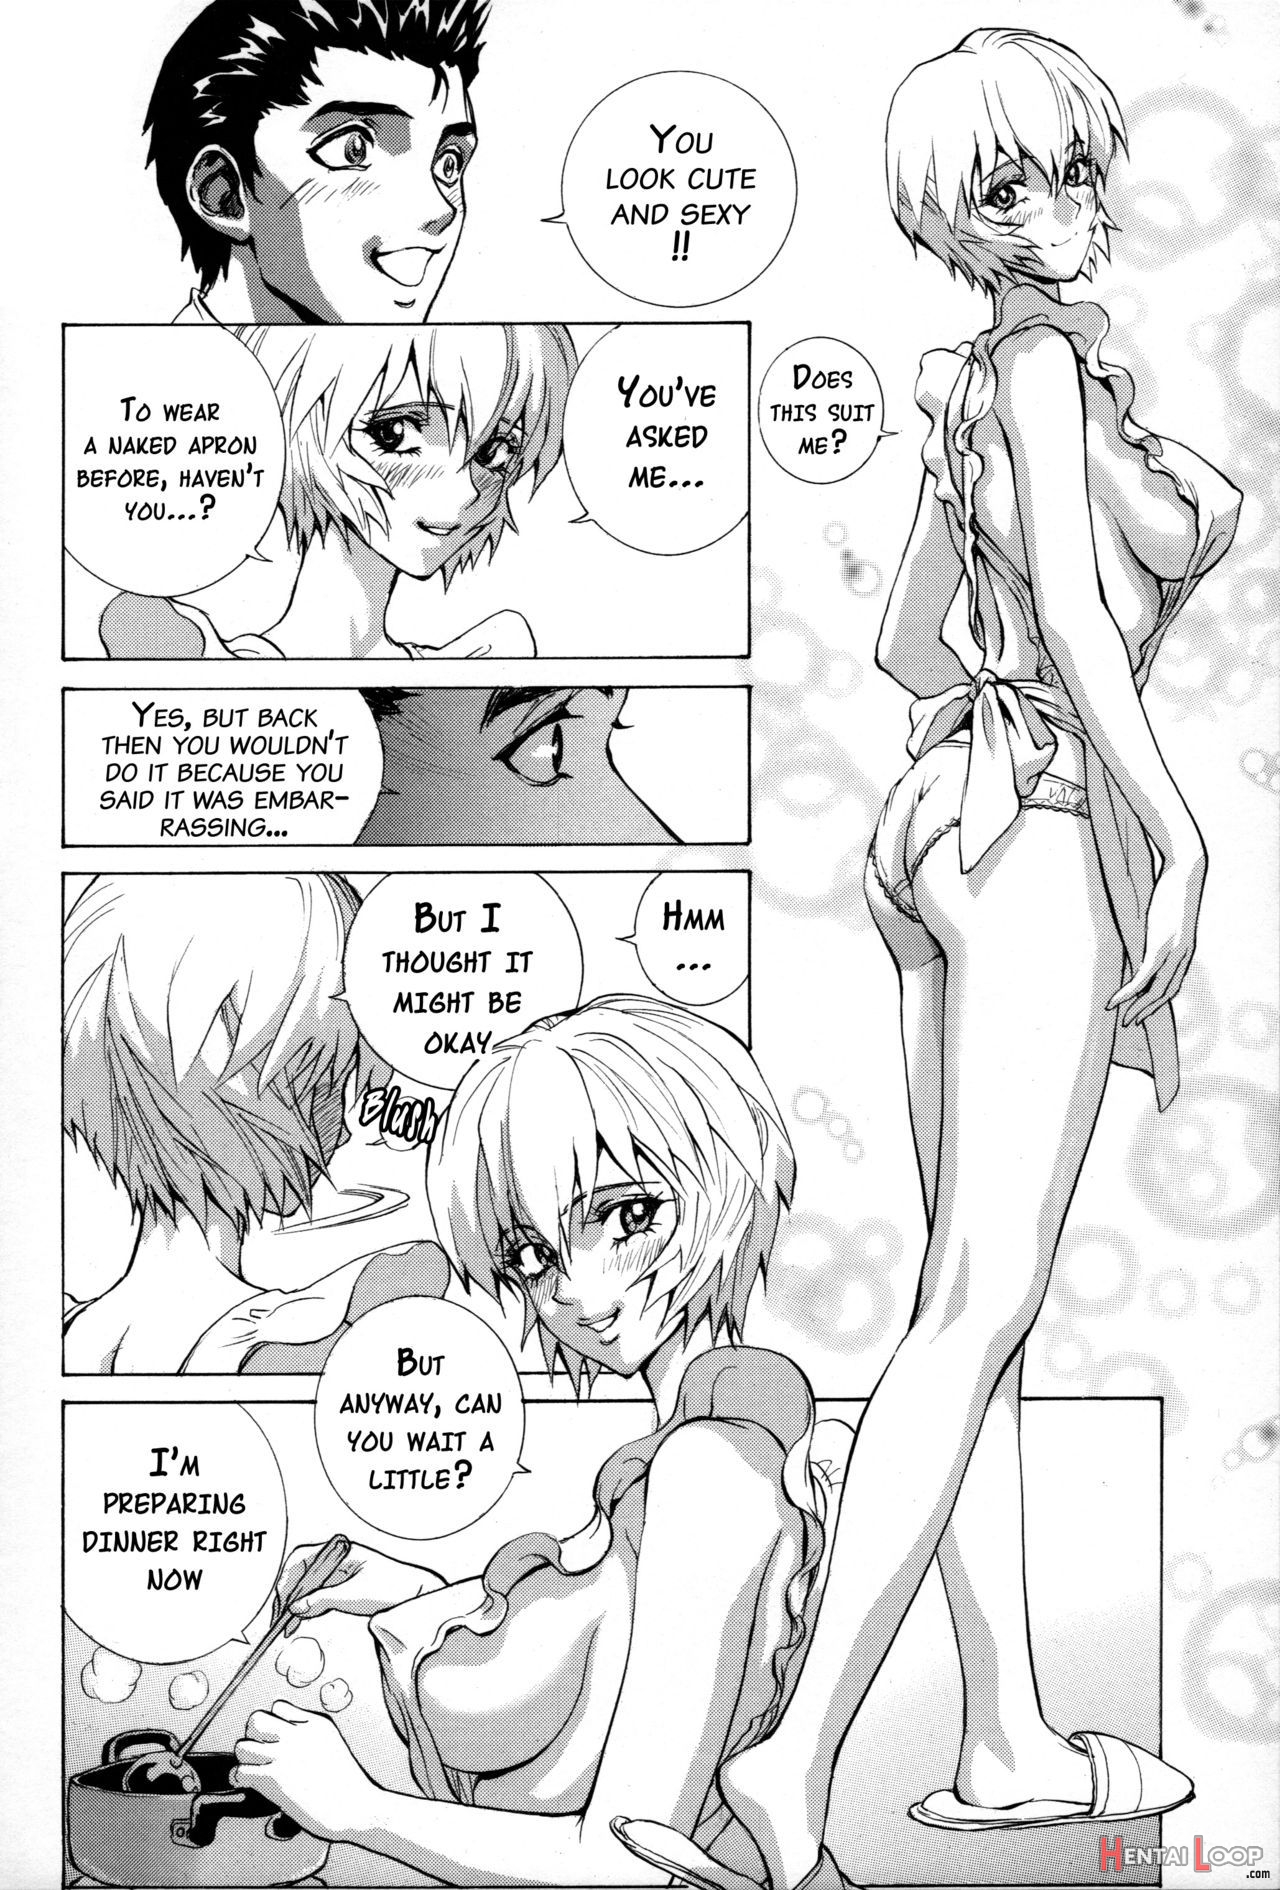 Ayanami î² page 5